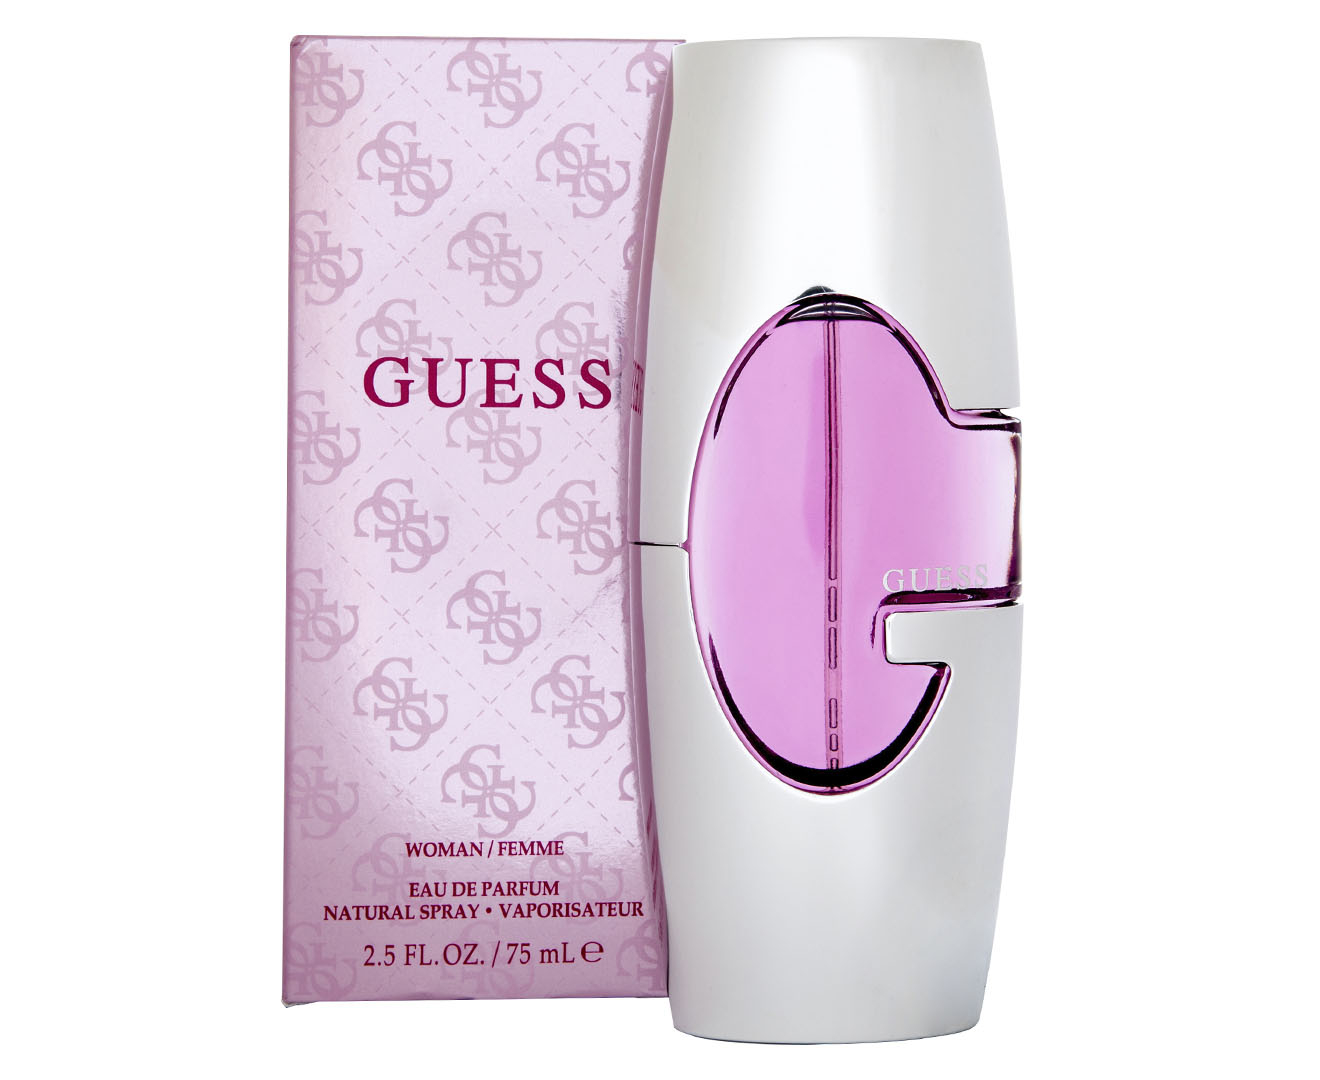 GUESS Woman For Women EDP Perfume 75mL | Catch.com.au